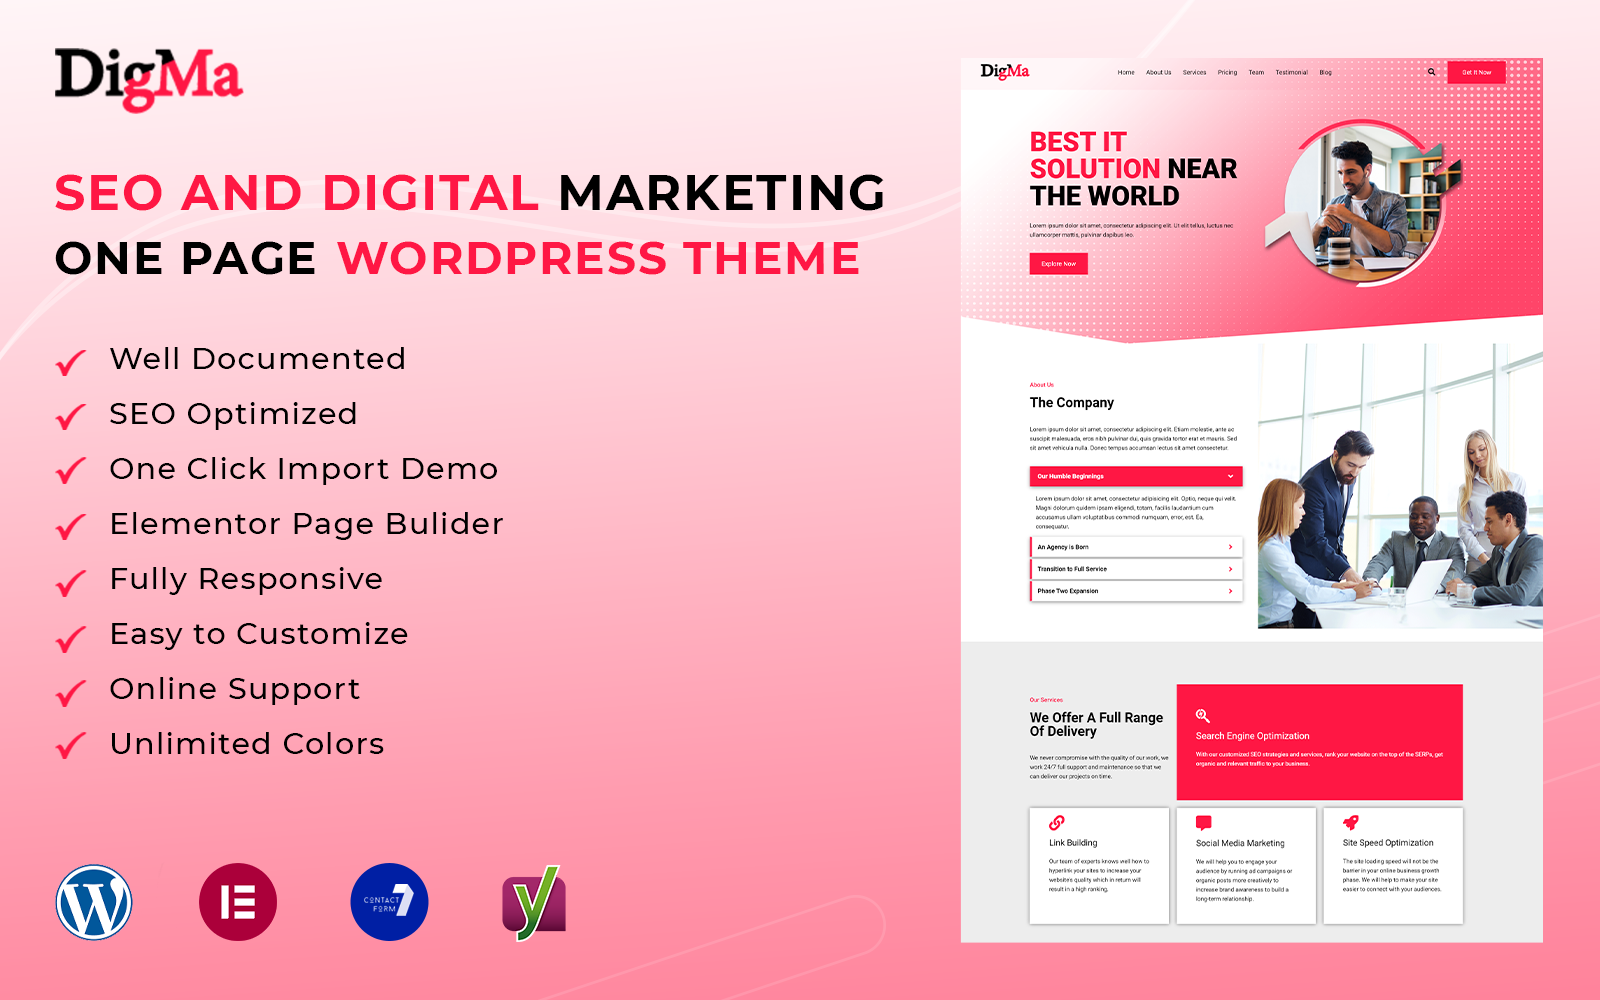 DigMa - SEO & Digital Marketing One Page Wordpress Theme